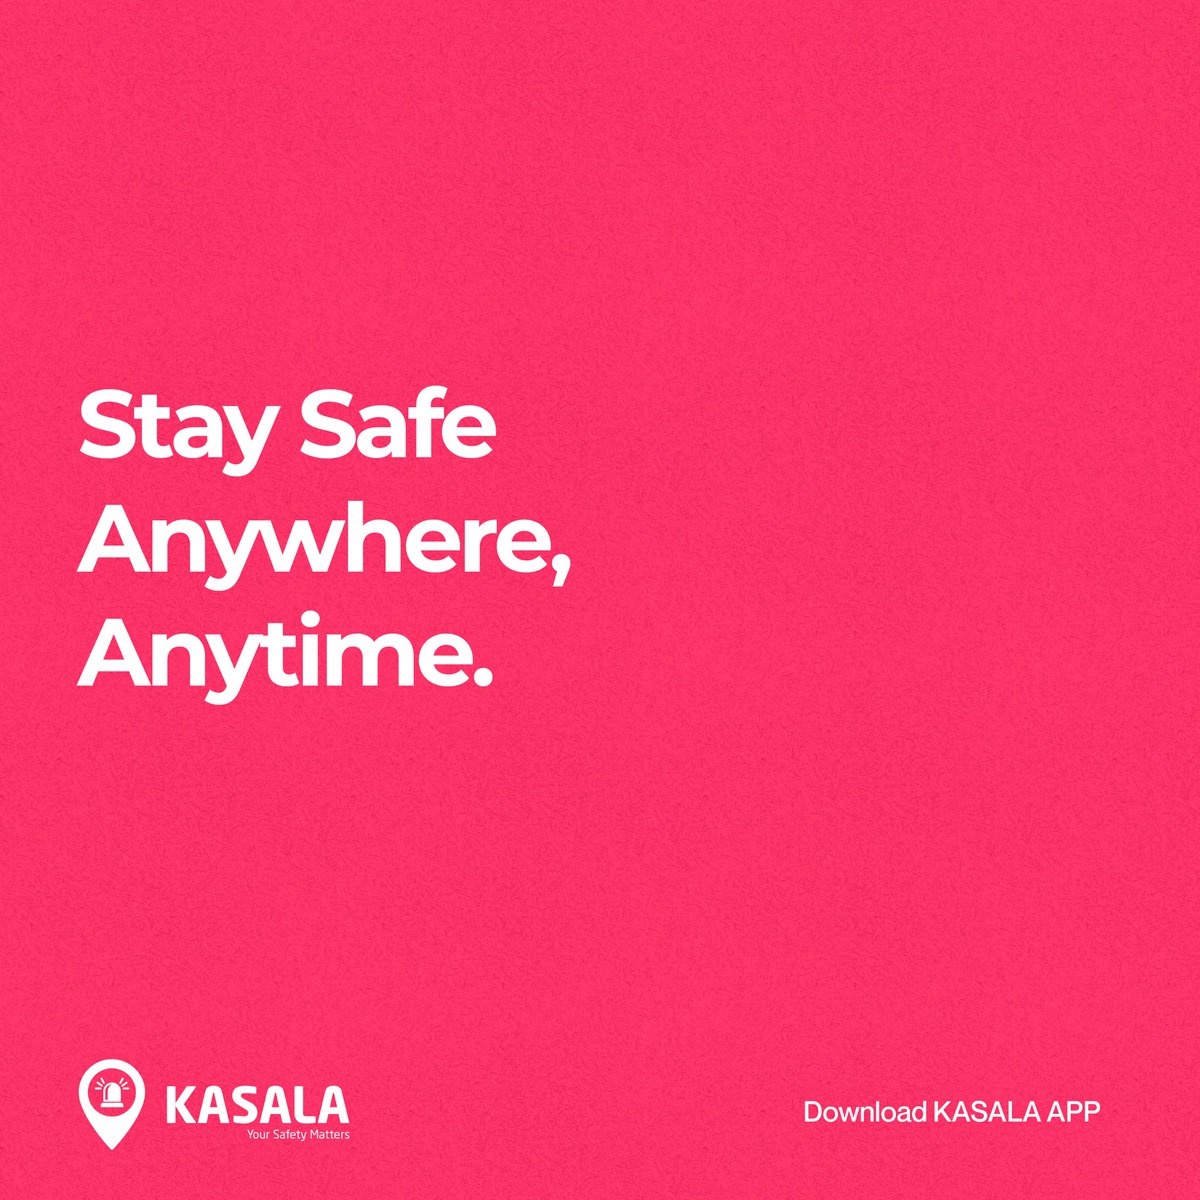 Stay Safe Anywhere, Anytime with Kasala App 

Download Kasala App

#metoo #timesUp #kasala #kasalaapp #endrapeculture #consentiskey #BelieveSurvivors #NotOkay #survivor #survivorloveletter #SAAM #sexualassault #sexualassaultawareness #sexualassaultawarenessmonth